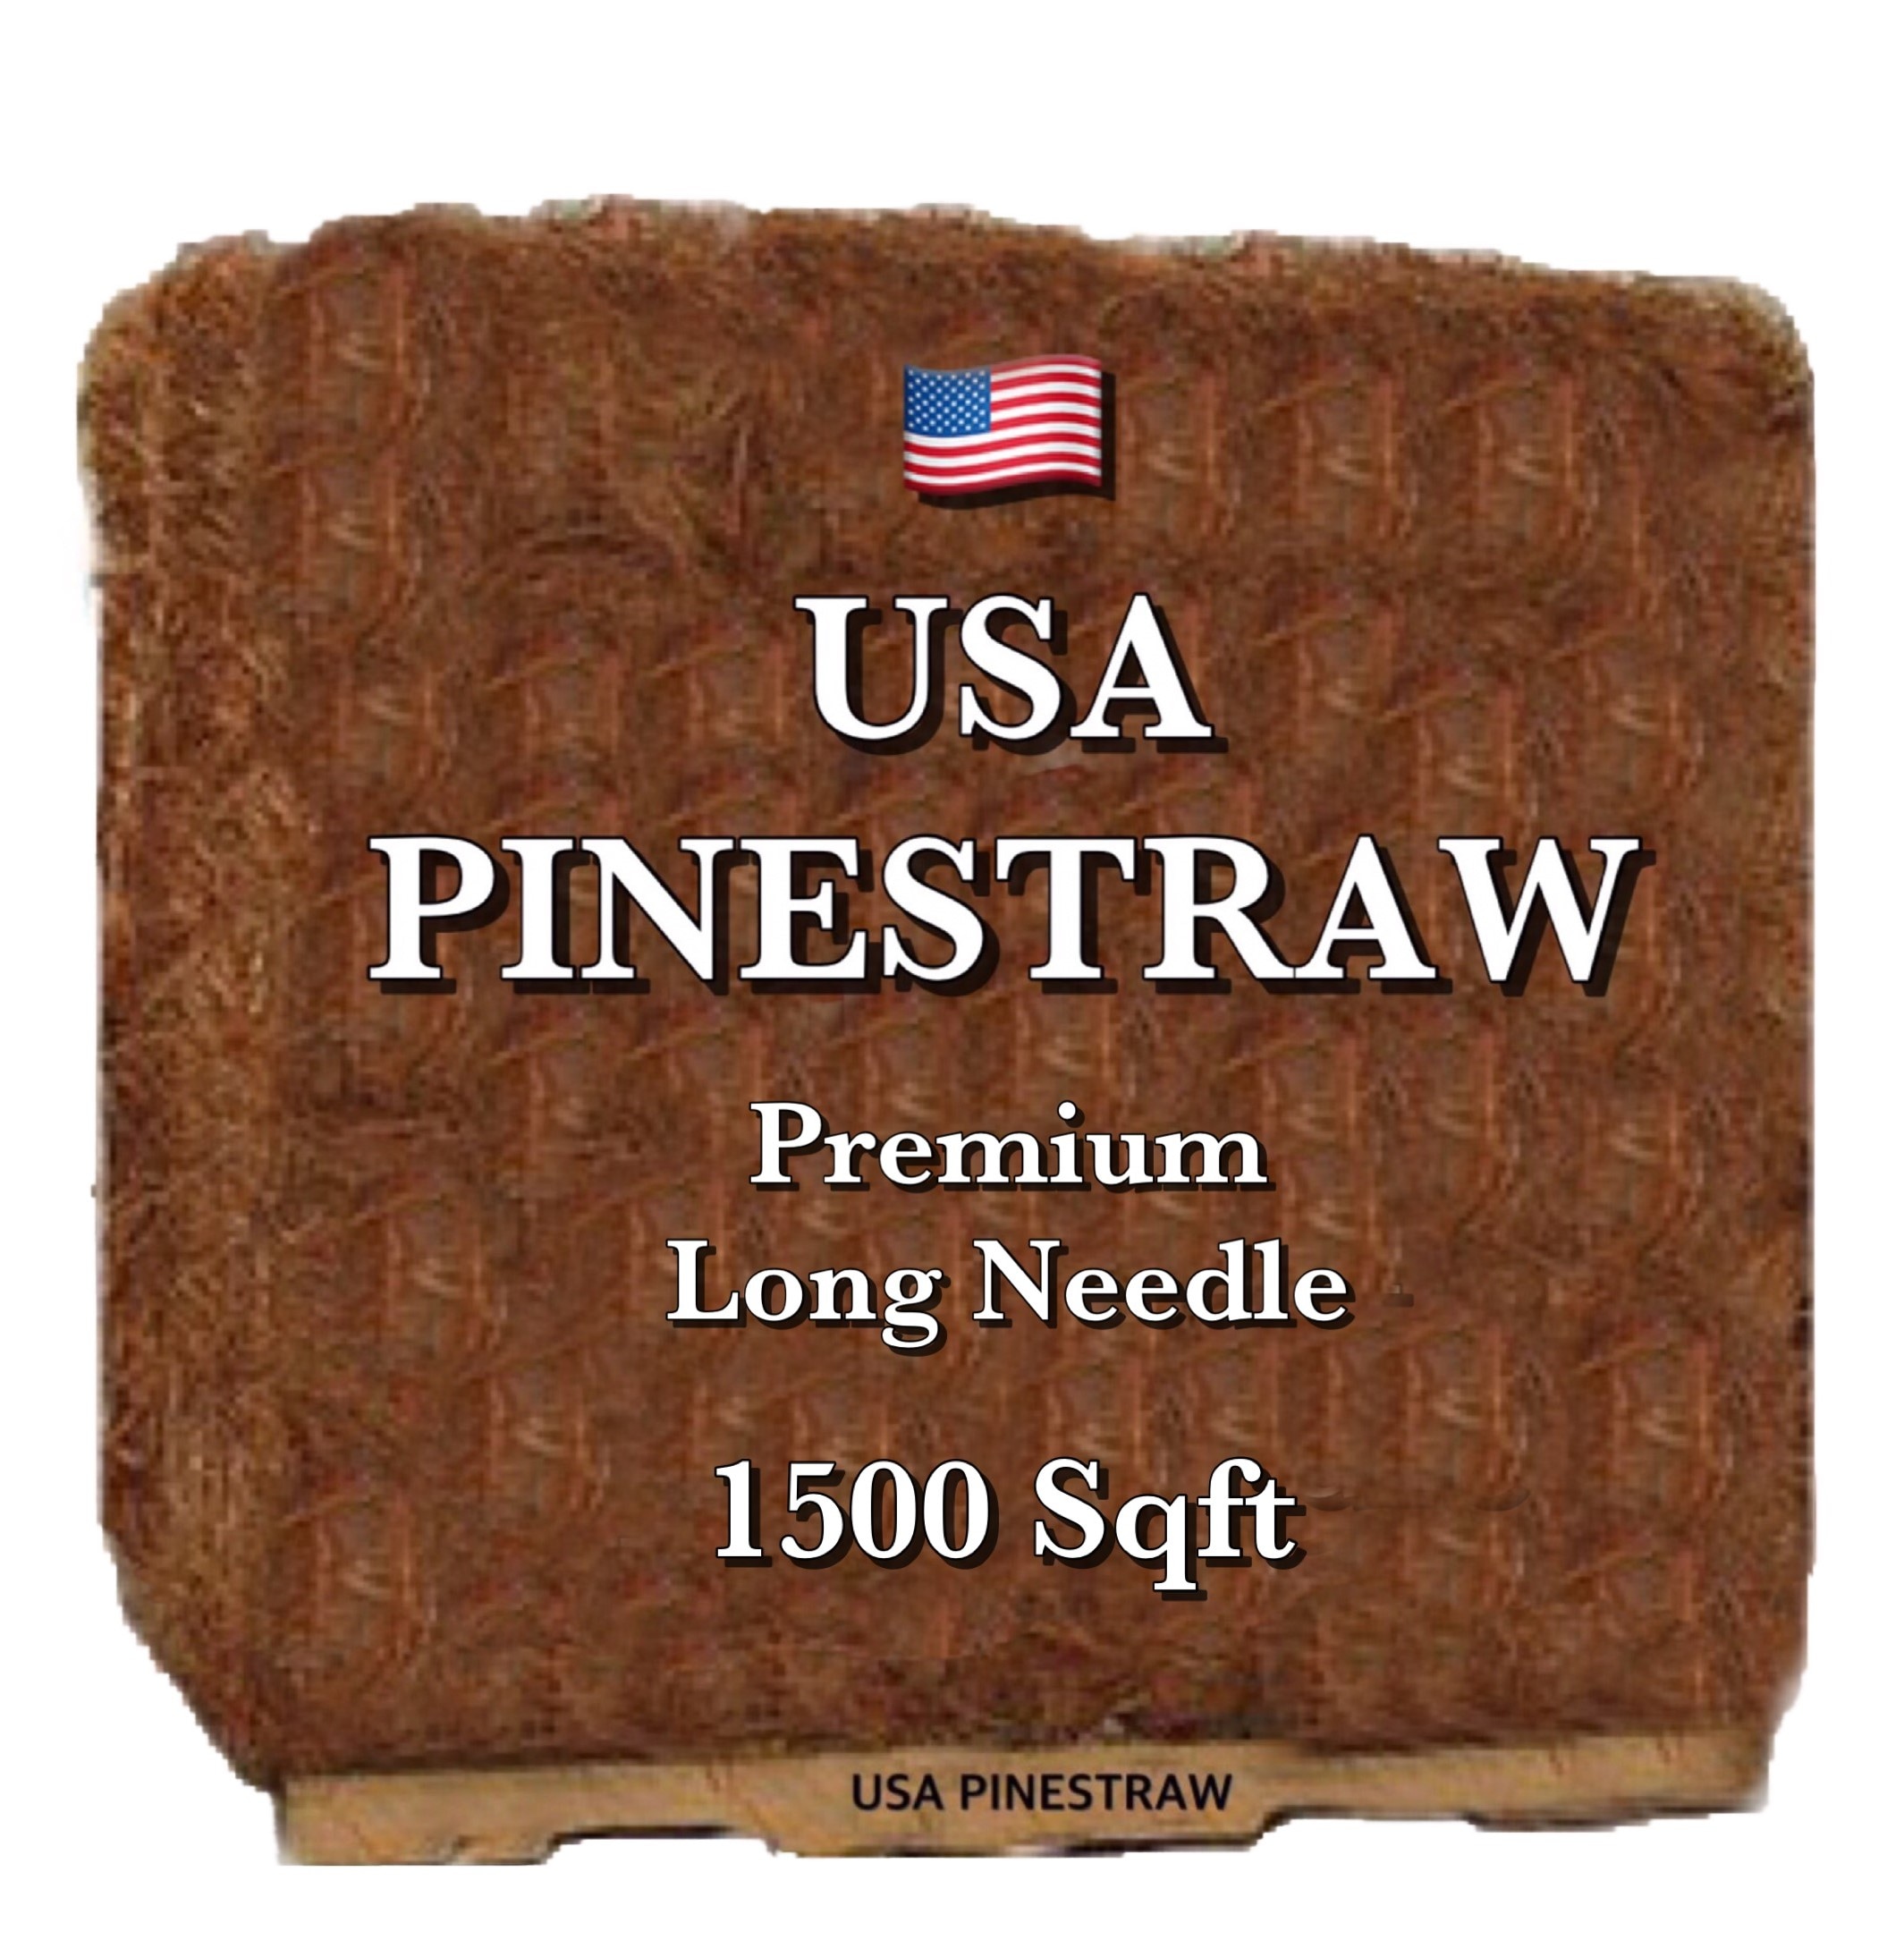 100% Pine Straw Mulch Heritage Farms Premium Pine Needles 4 quart 